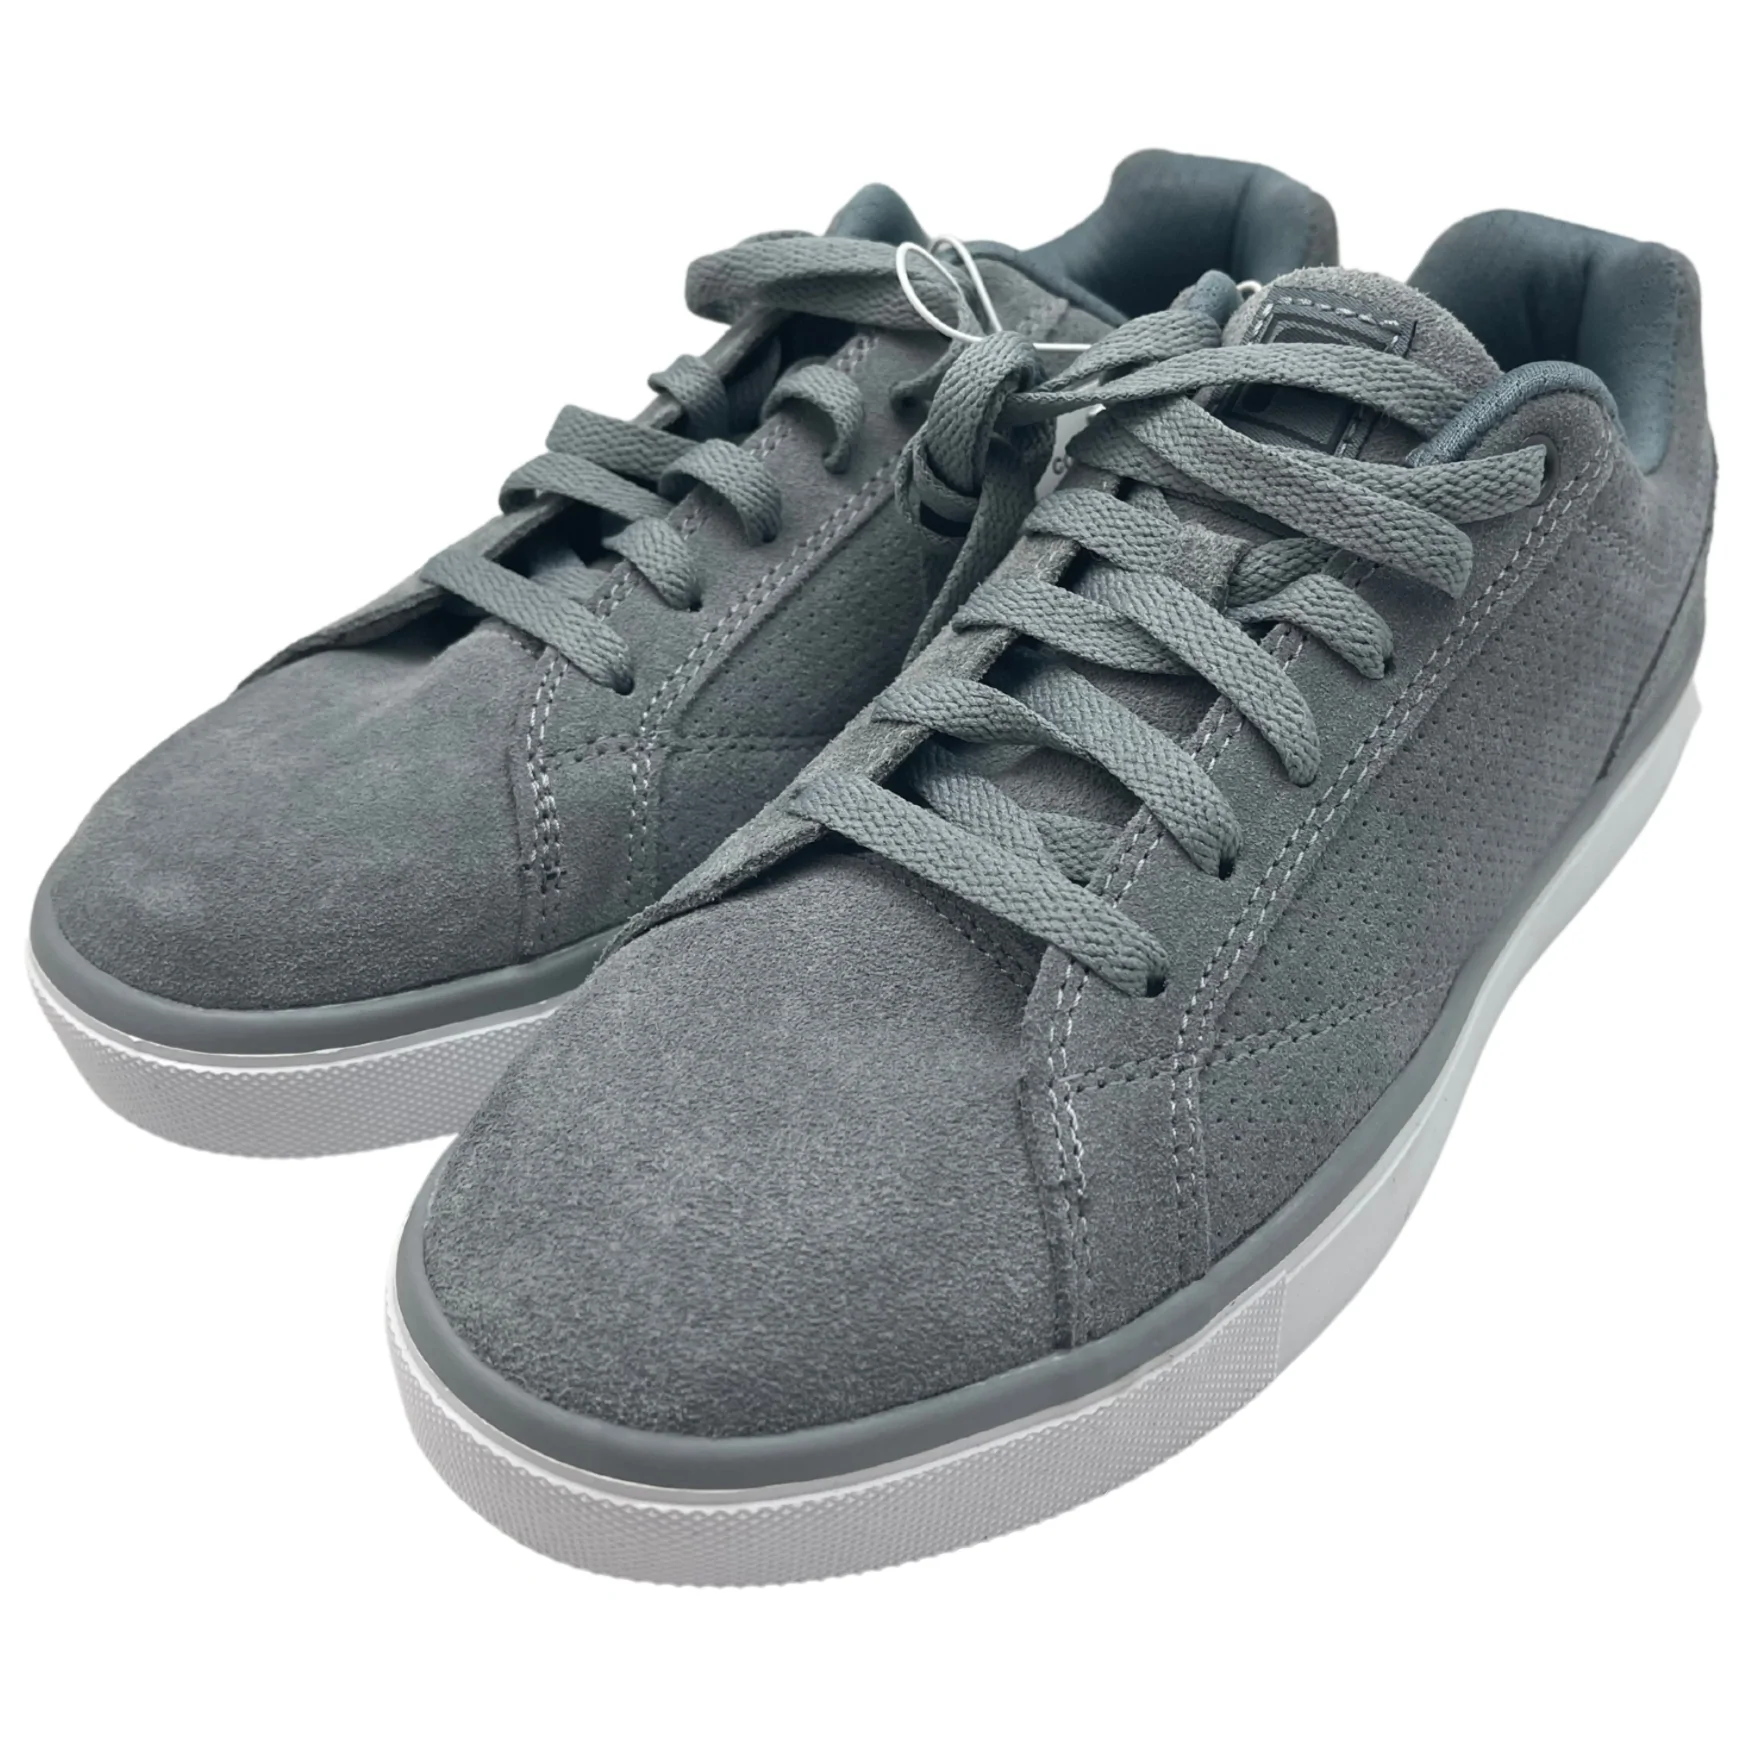 Fila Men's Casual Sneaker / Memory Merger / Light Grey / Size 8